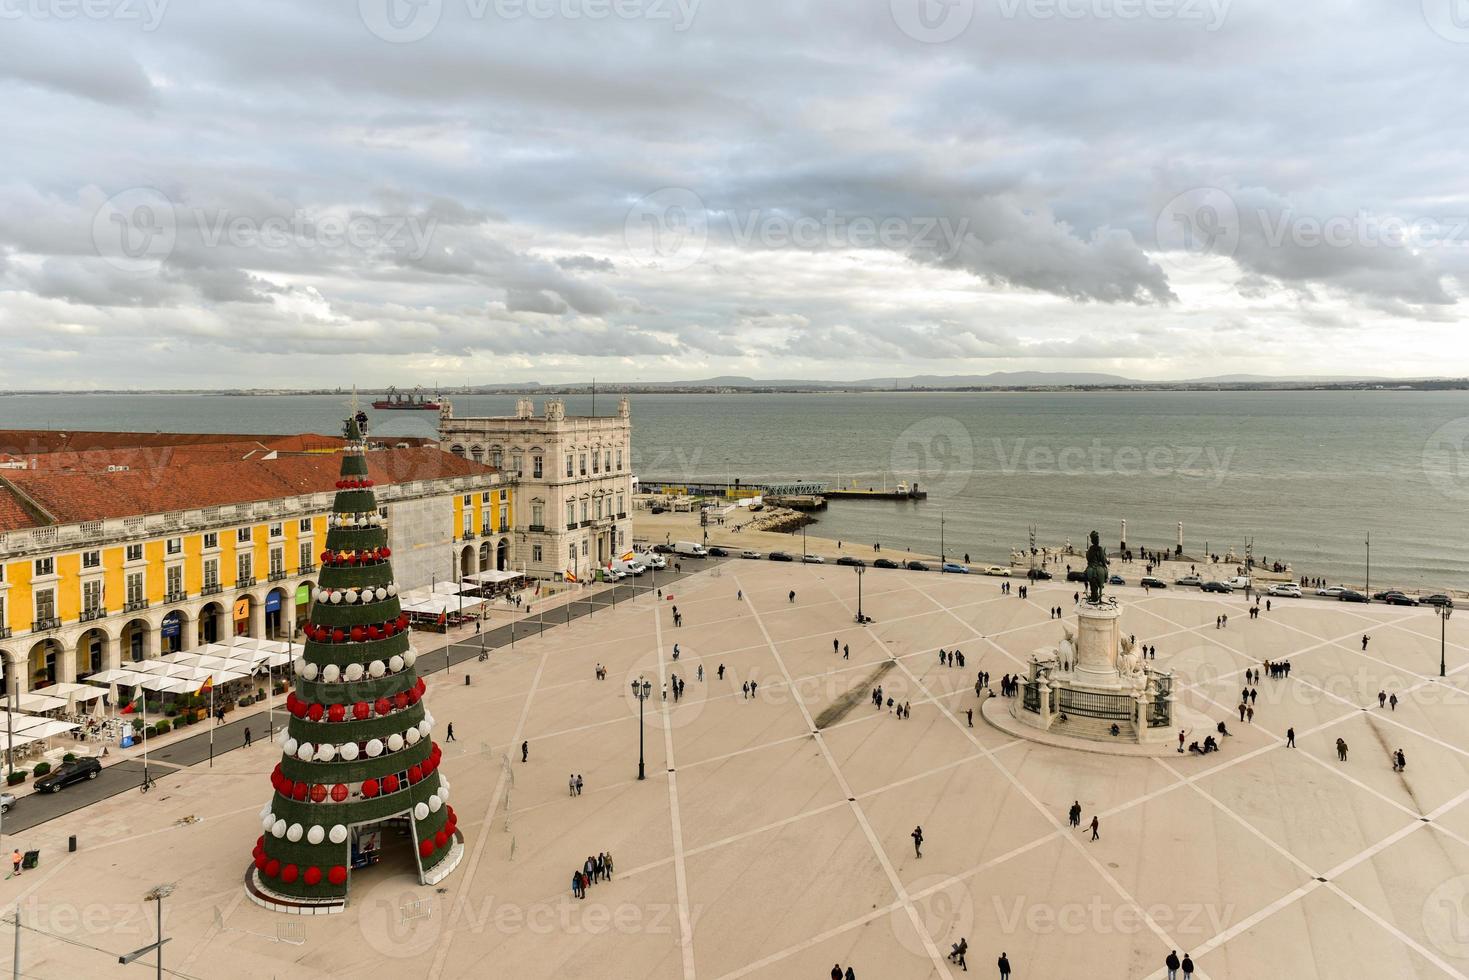 handel plein in Lissabon, Portugal met Kerstmis decoraties. foto